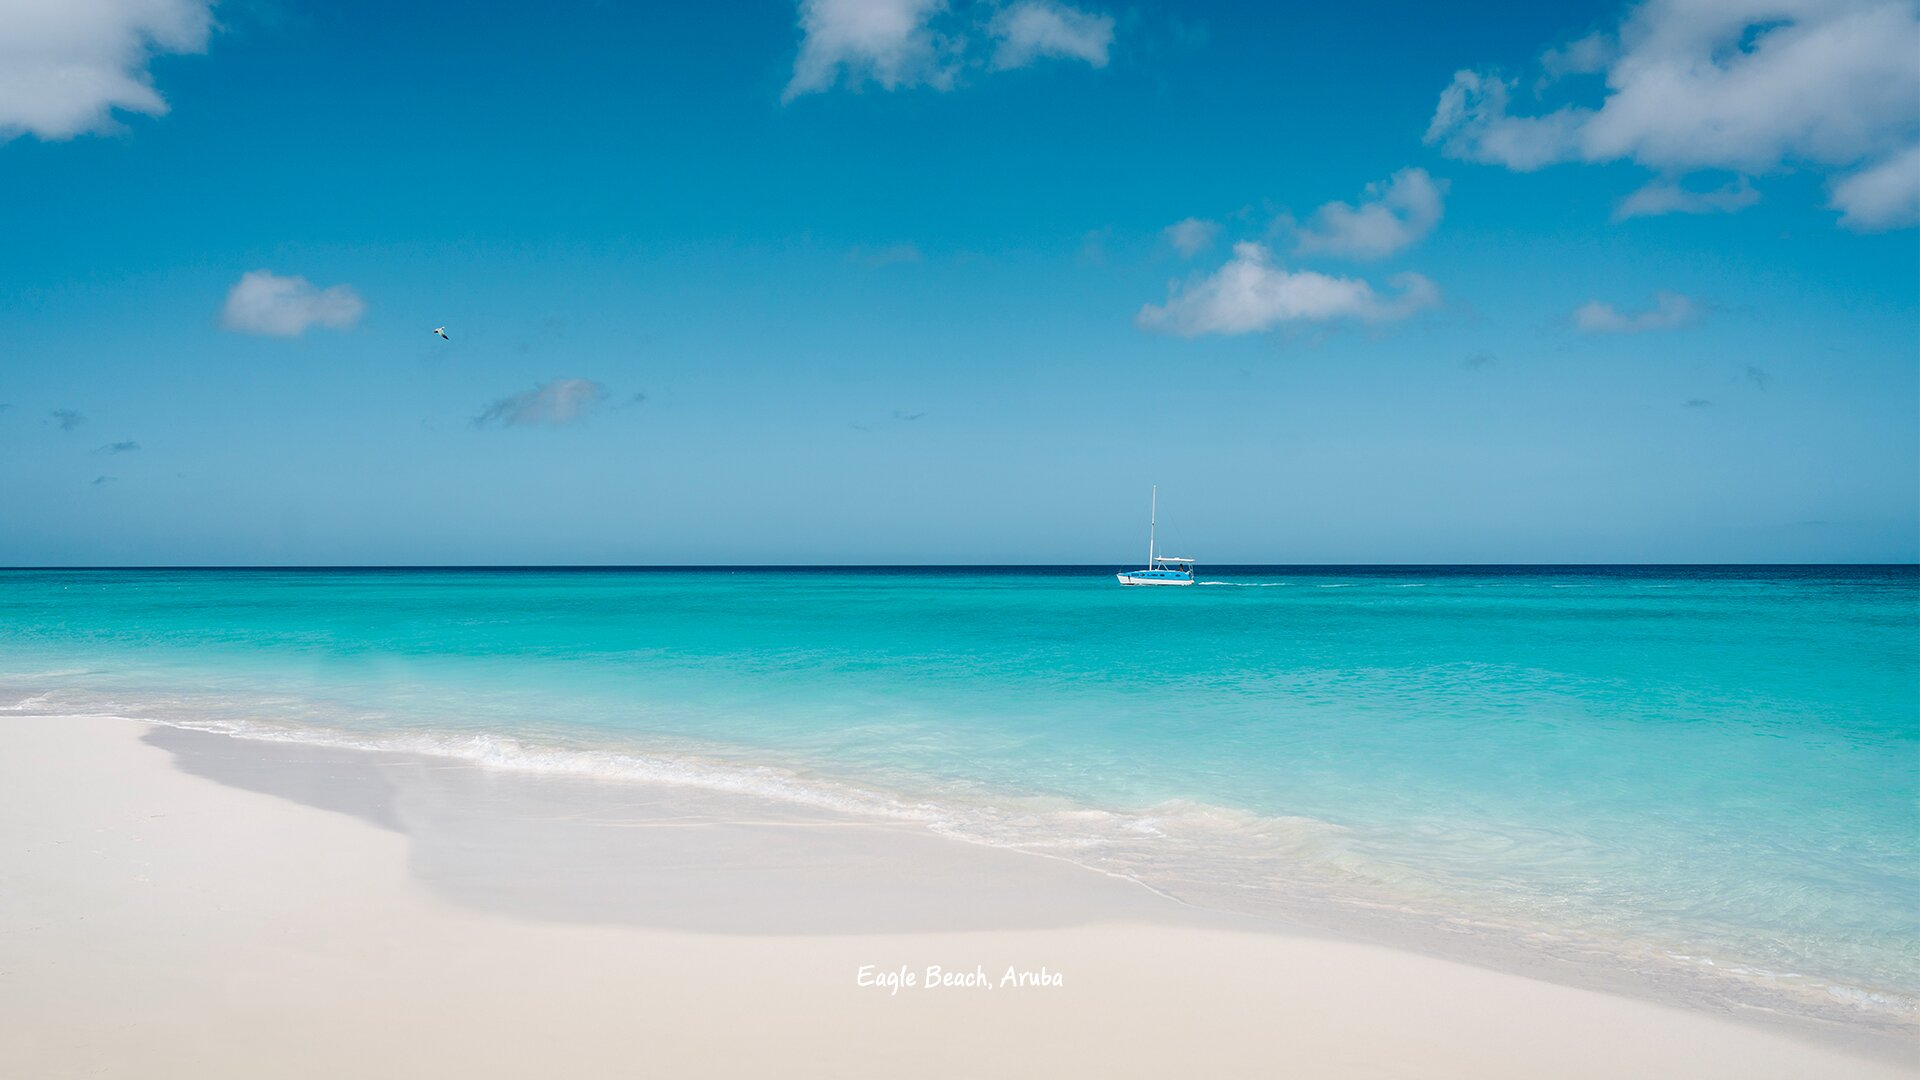 Aruba Luxury Hotel And Beach Islands Iphone Wallpaper Hd Aruba  Imágenes  españoles